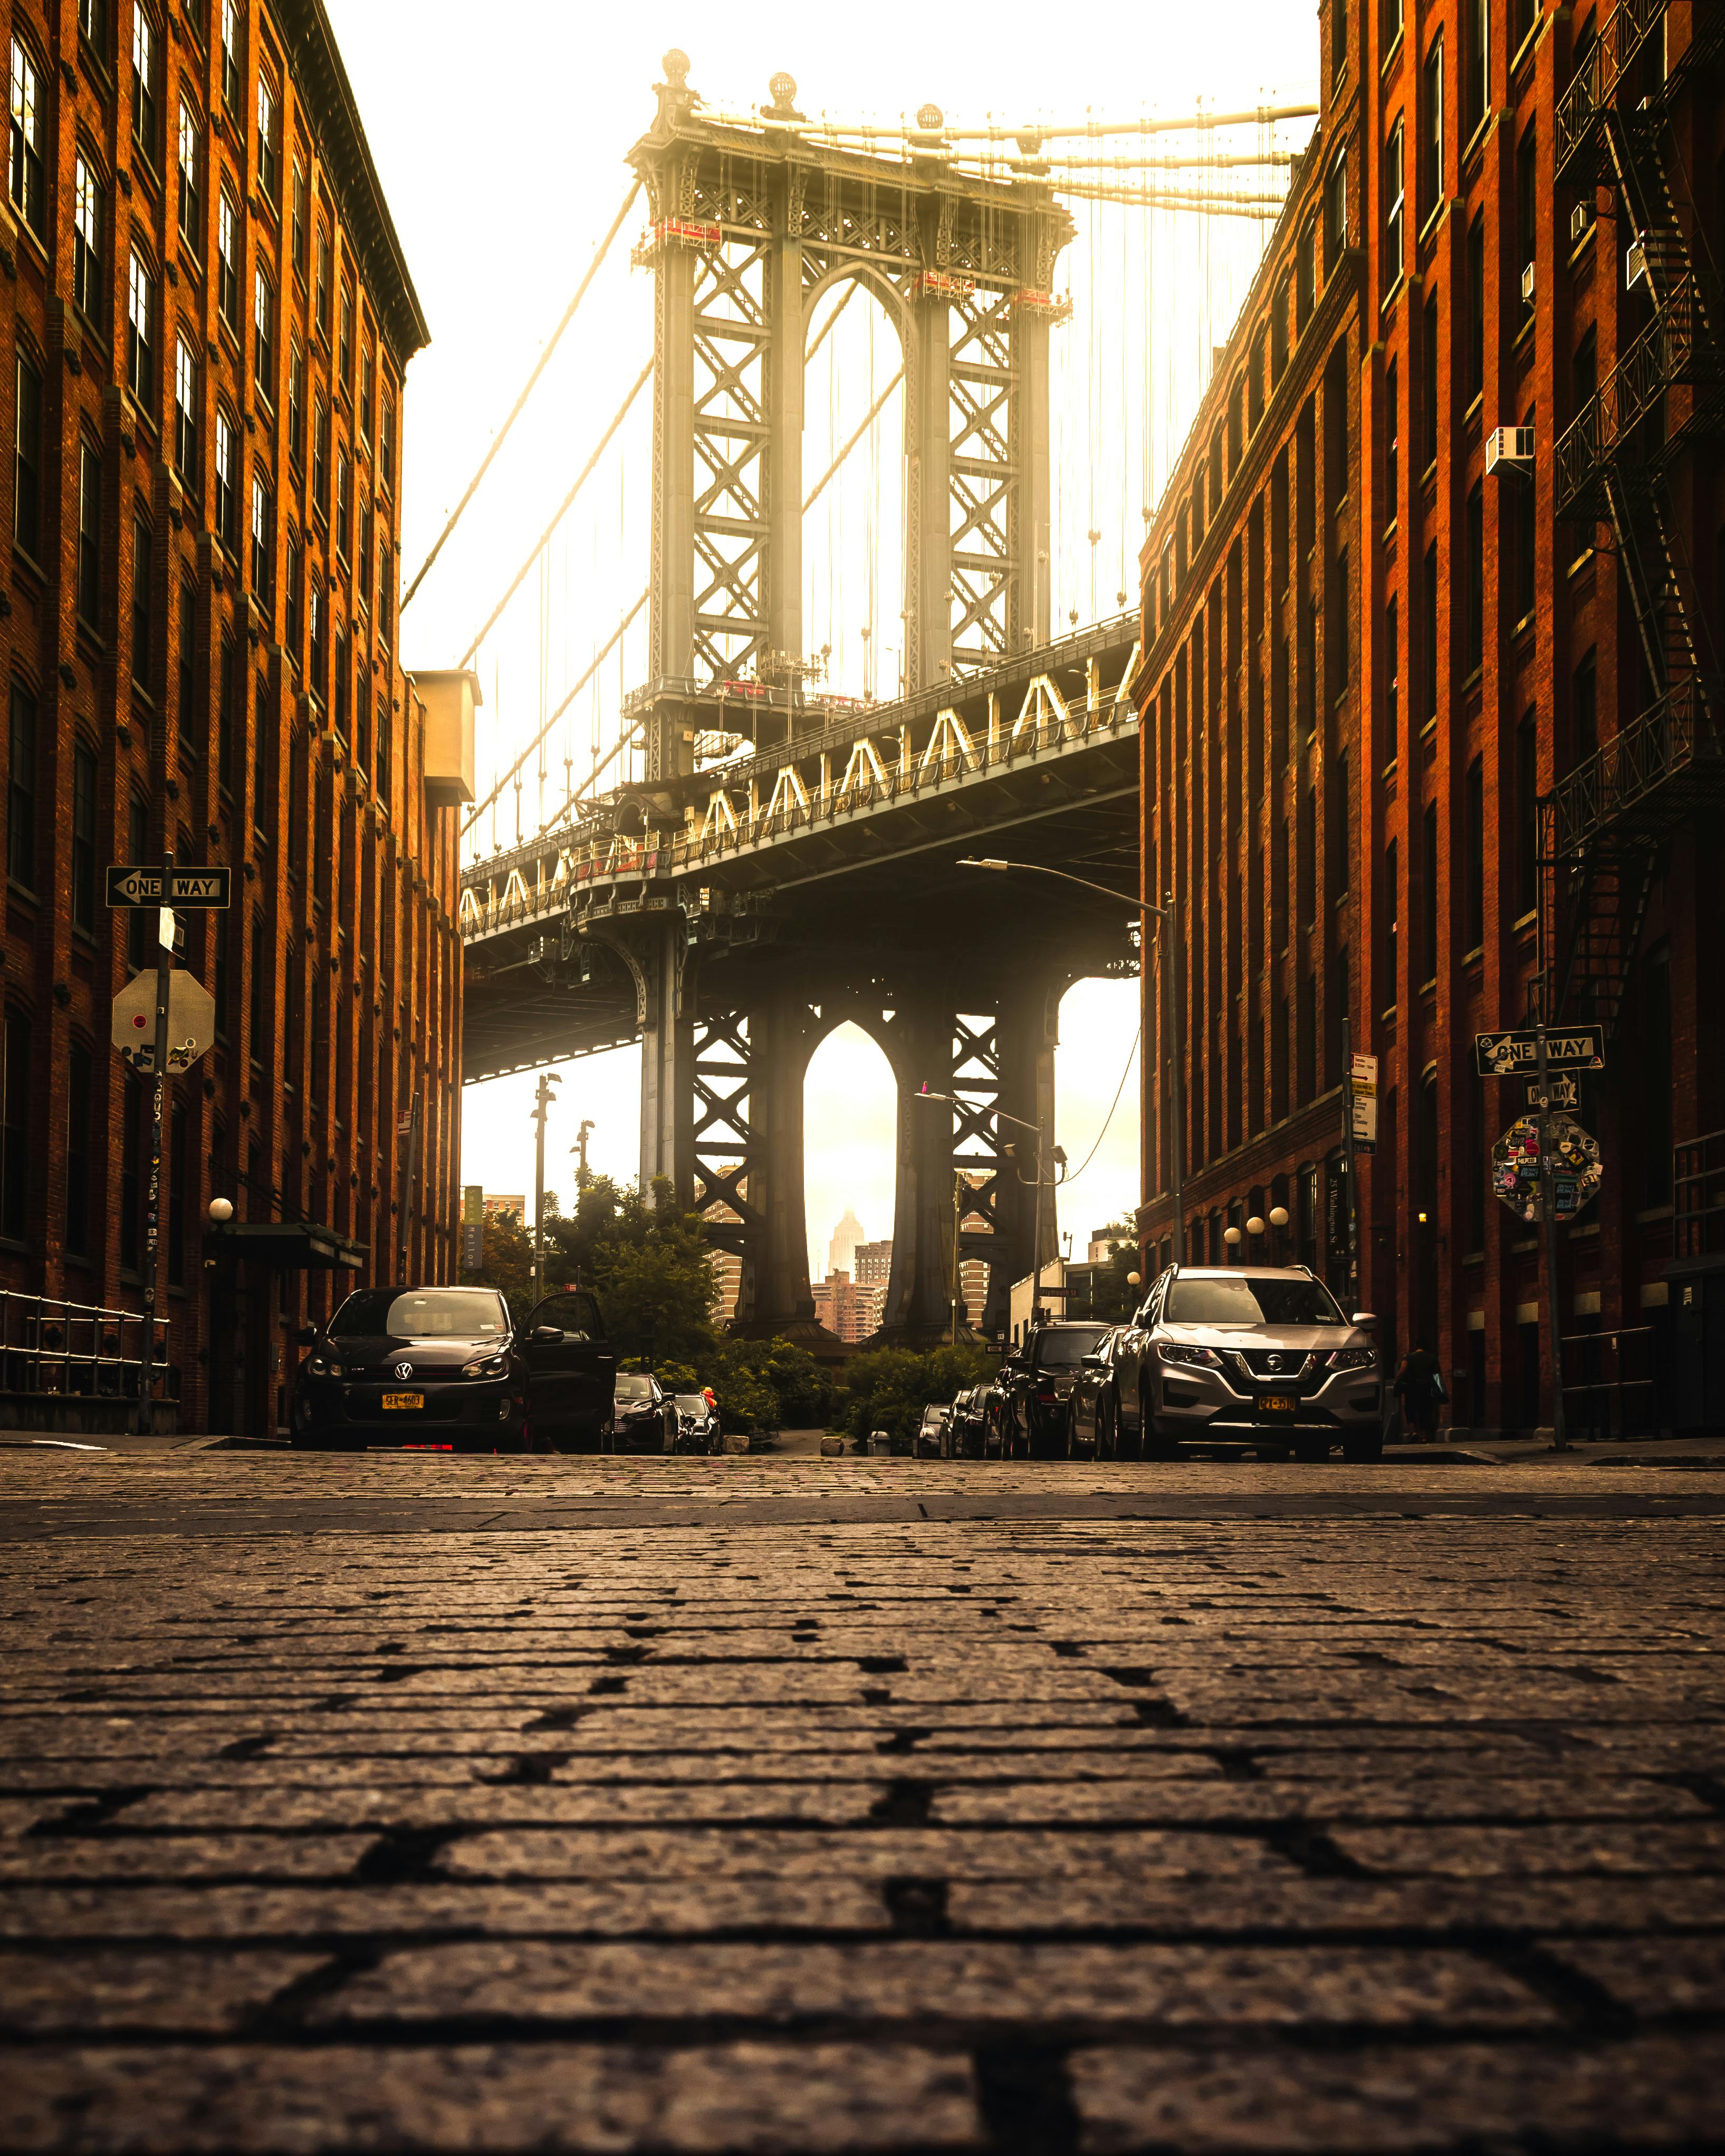 Brooklyn Bridge Photos Download The BEST Free Brooklyn Bridge Stock Photos   HD Images